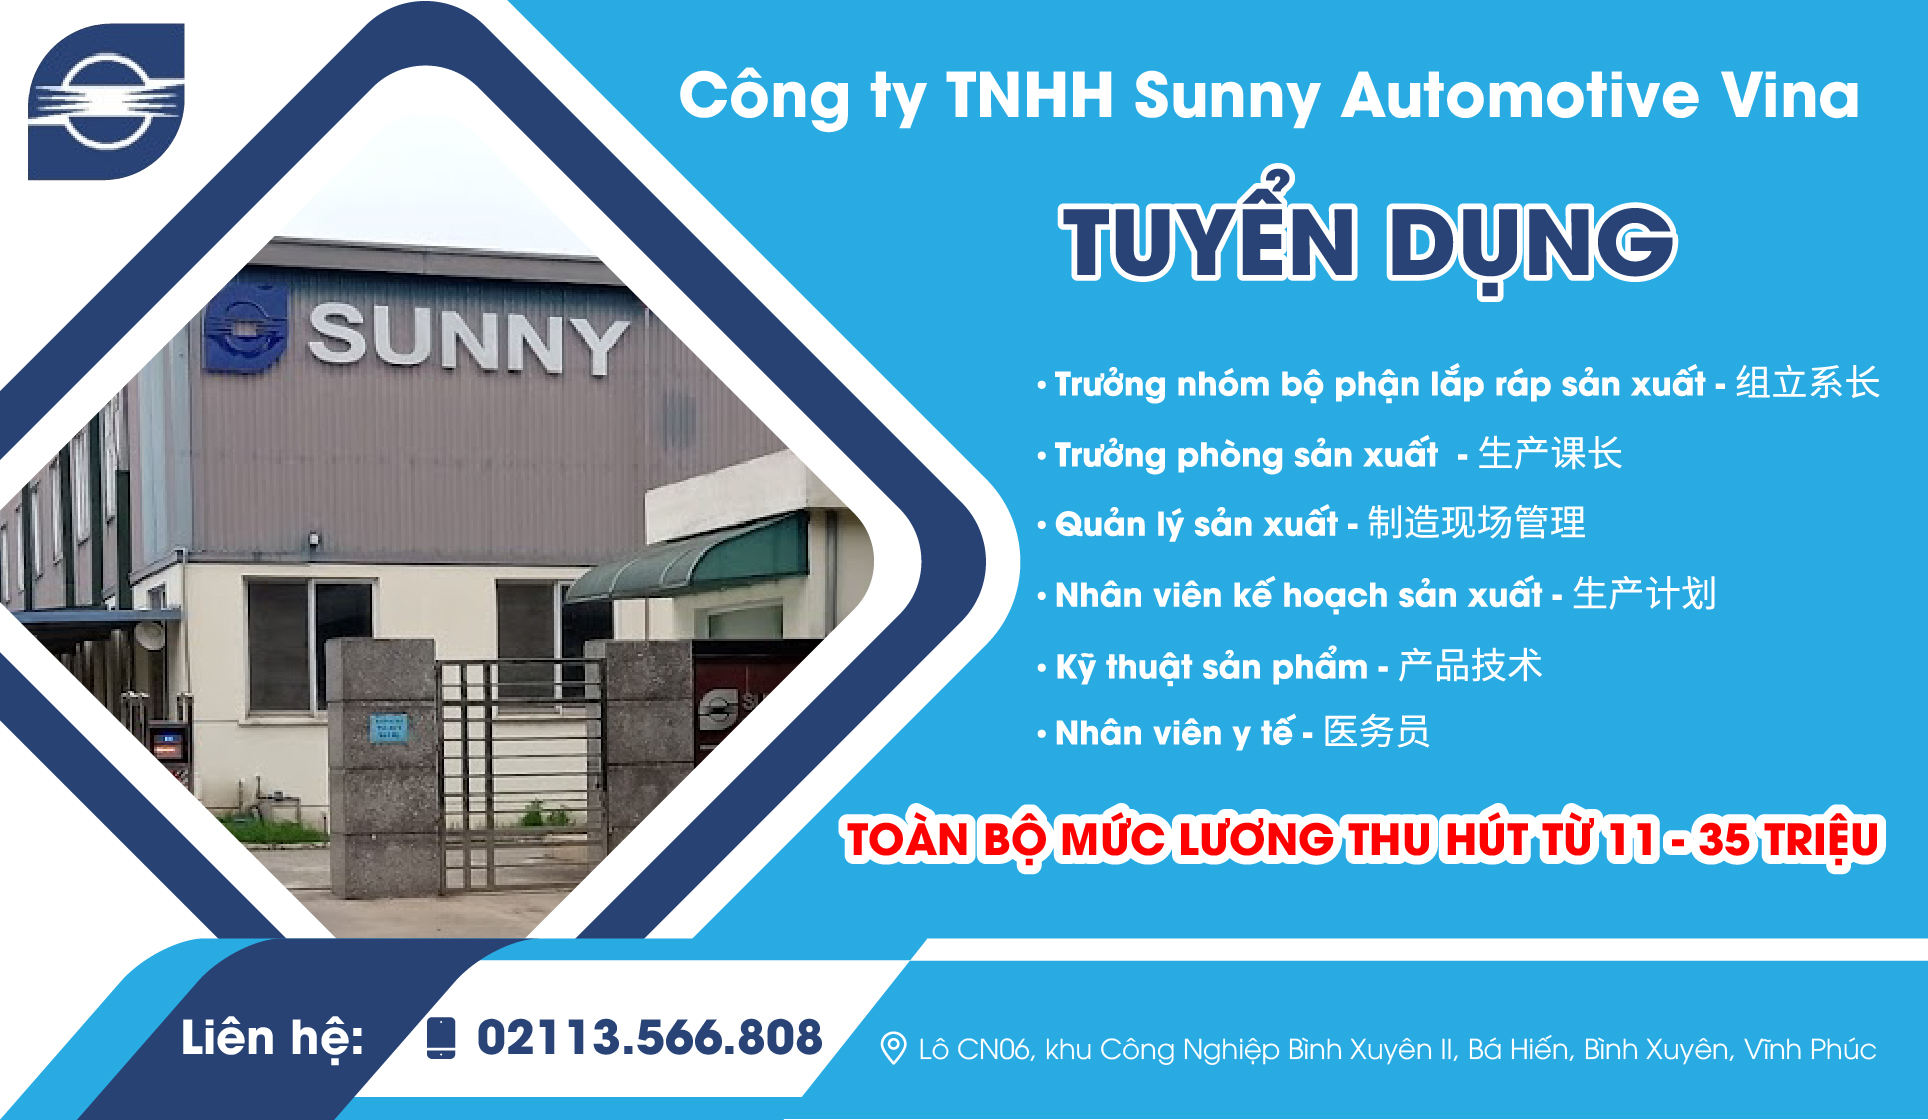 image lam them deu khong so het viec sunny automotive vina thong bao tuyen dung cac vi tri tieng trung copy vinhphucwork 7 250424 094747